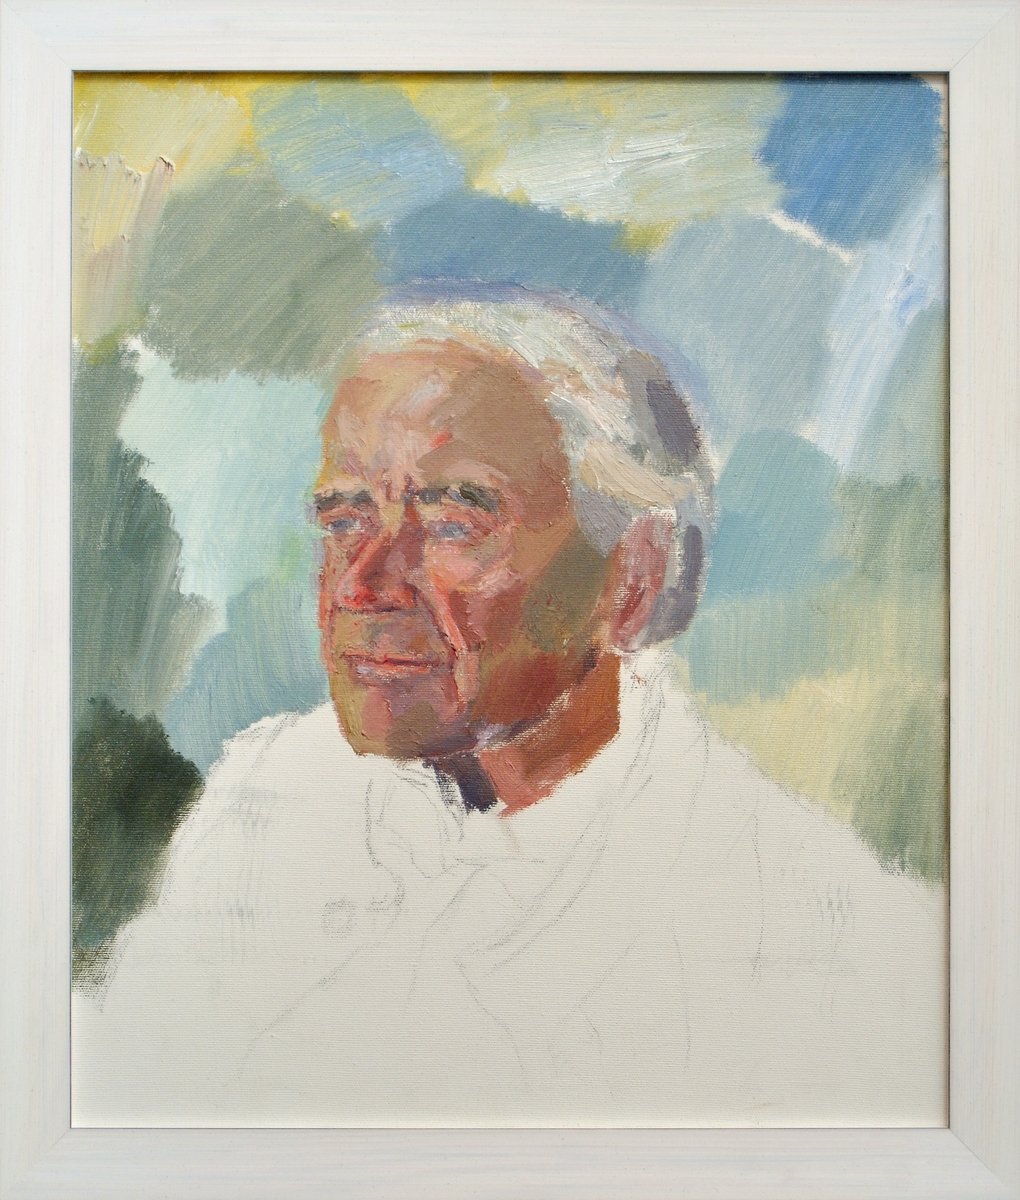 Olja på duk, "Porträtt av Ralph Erskine", 2003, Birger Forsberg.